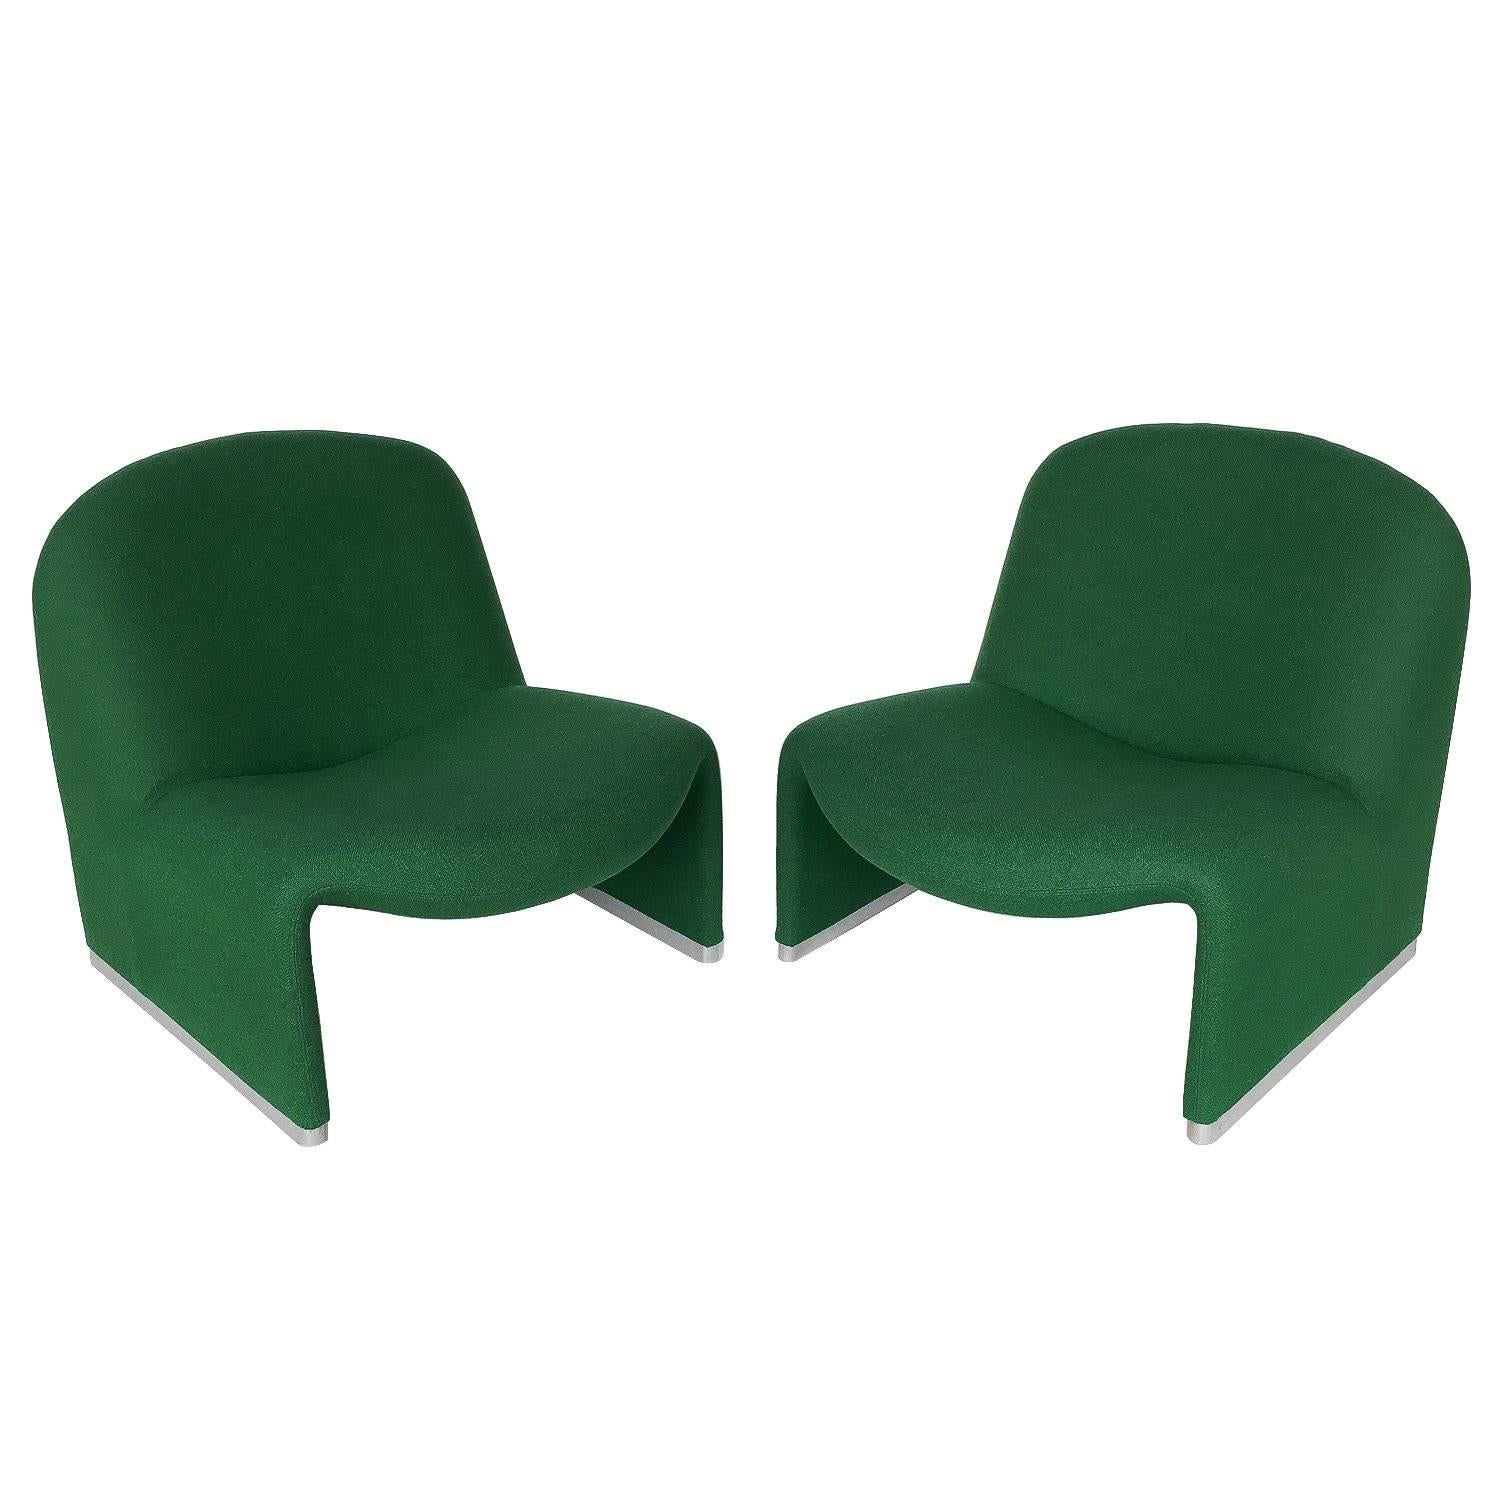 Pair of Giancarlo Piretti "Alky" Slipper Lounge Chairs